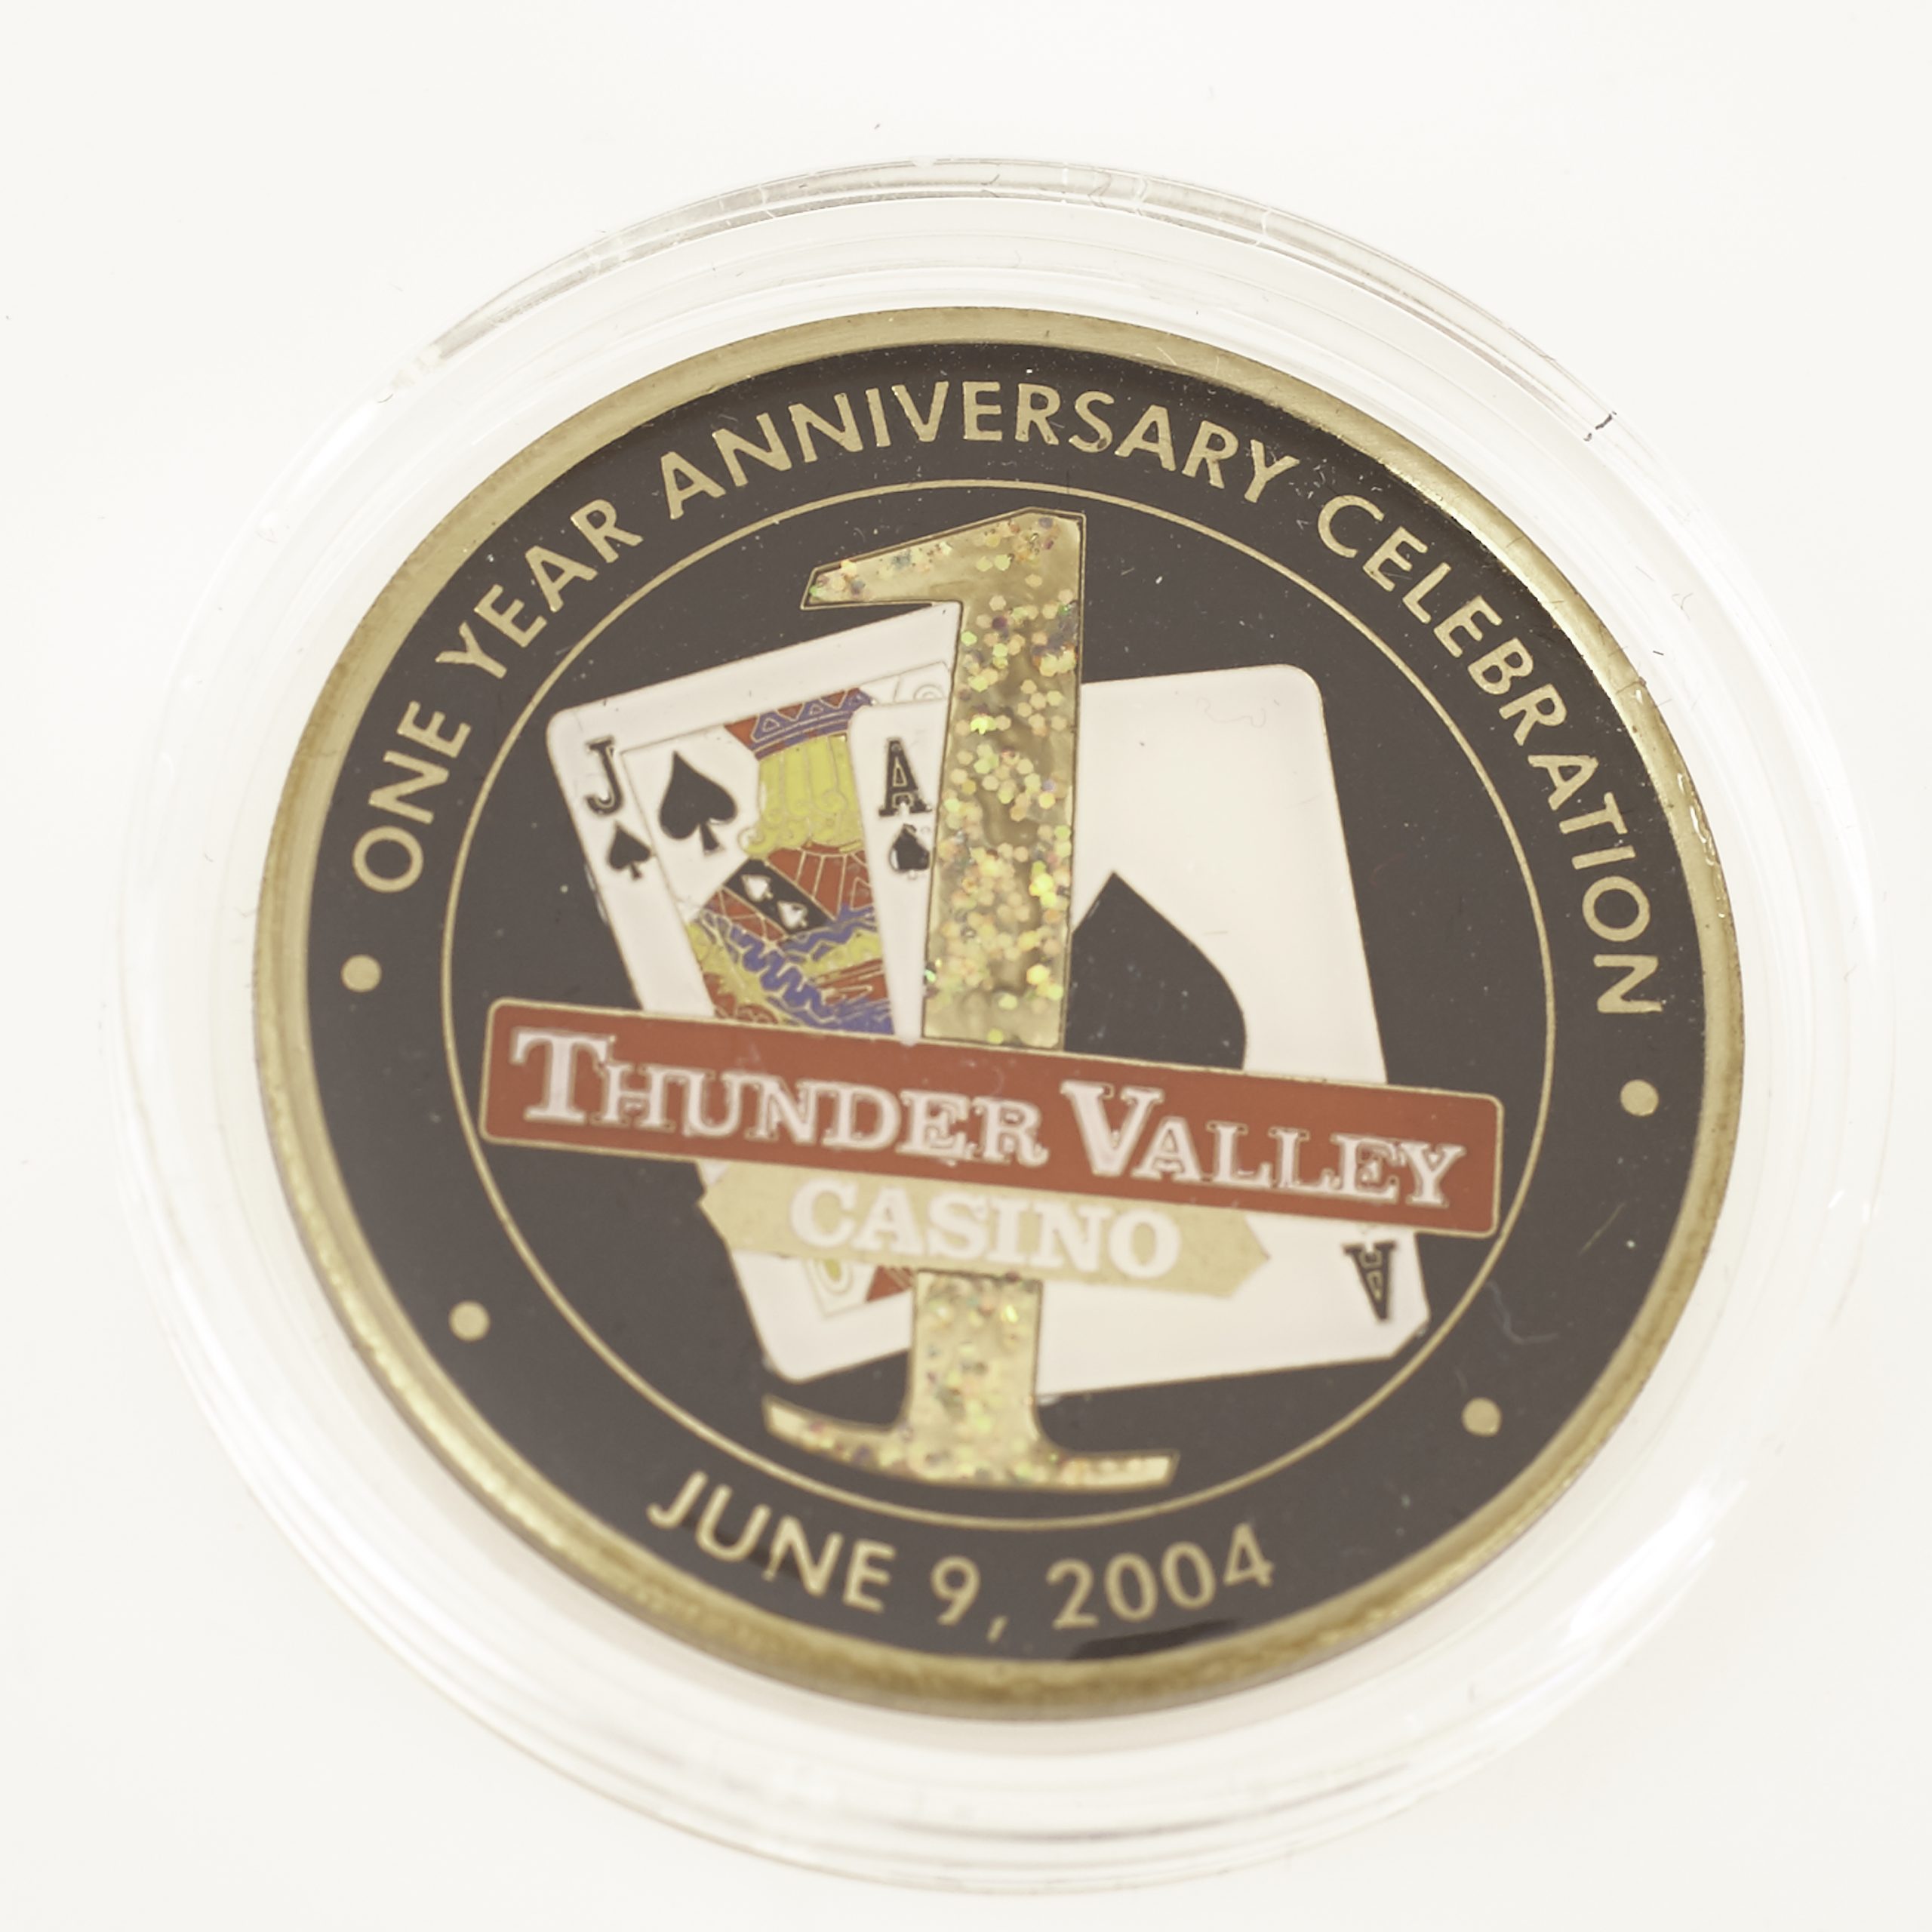 THUNDER VALLEY CASINO, ONE YEAR ANNIVERSARY CELEBRATION, June 9, 2004, Poker Card Guard